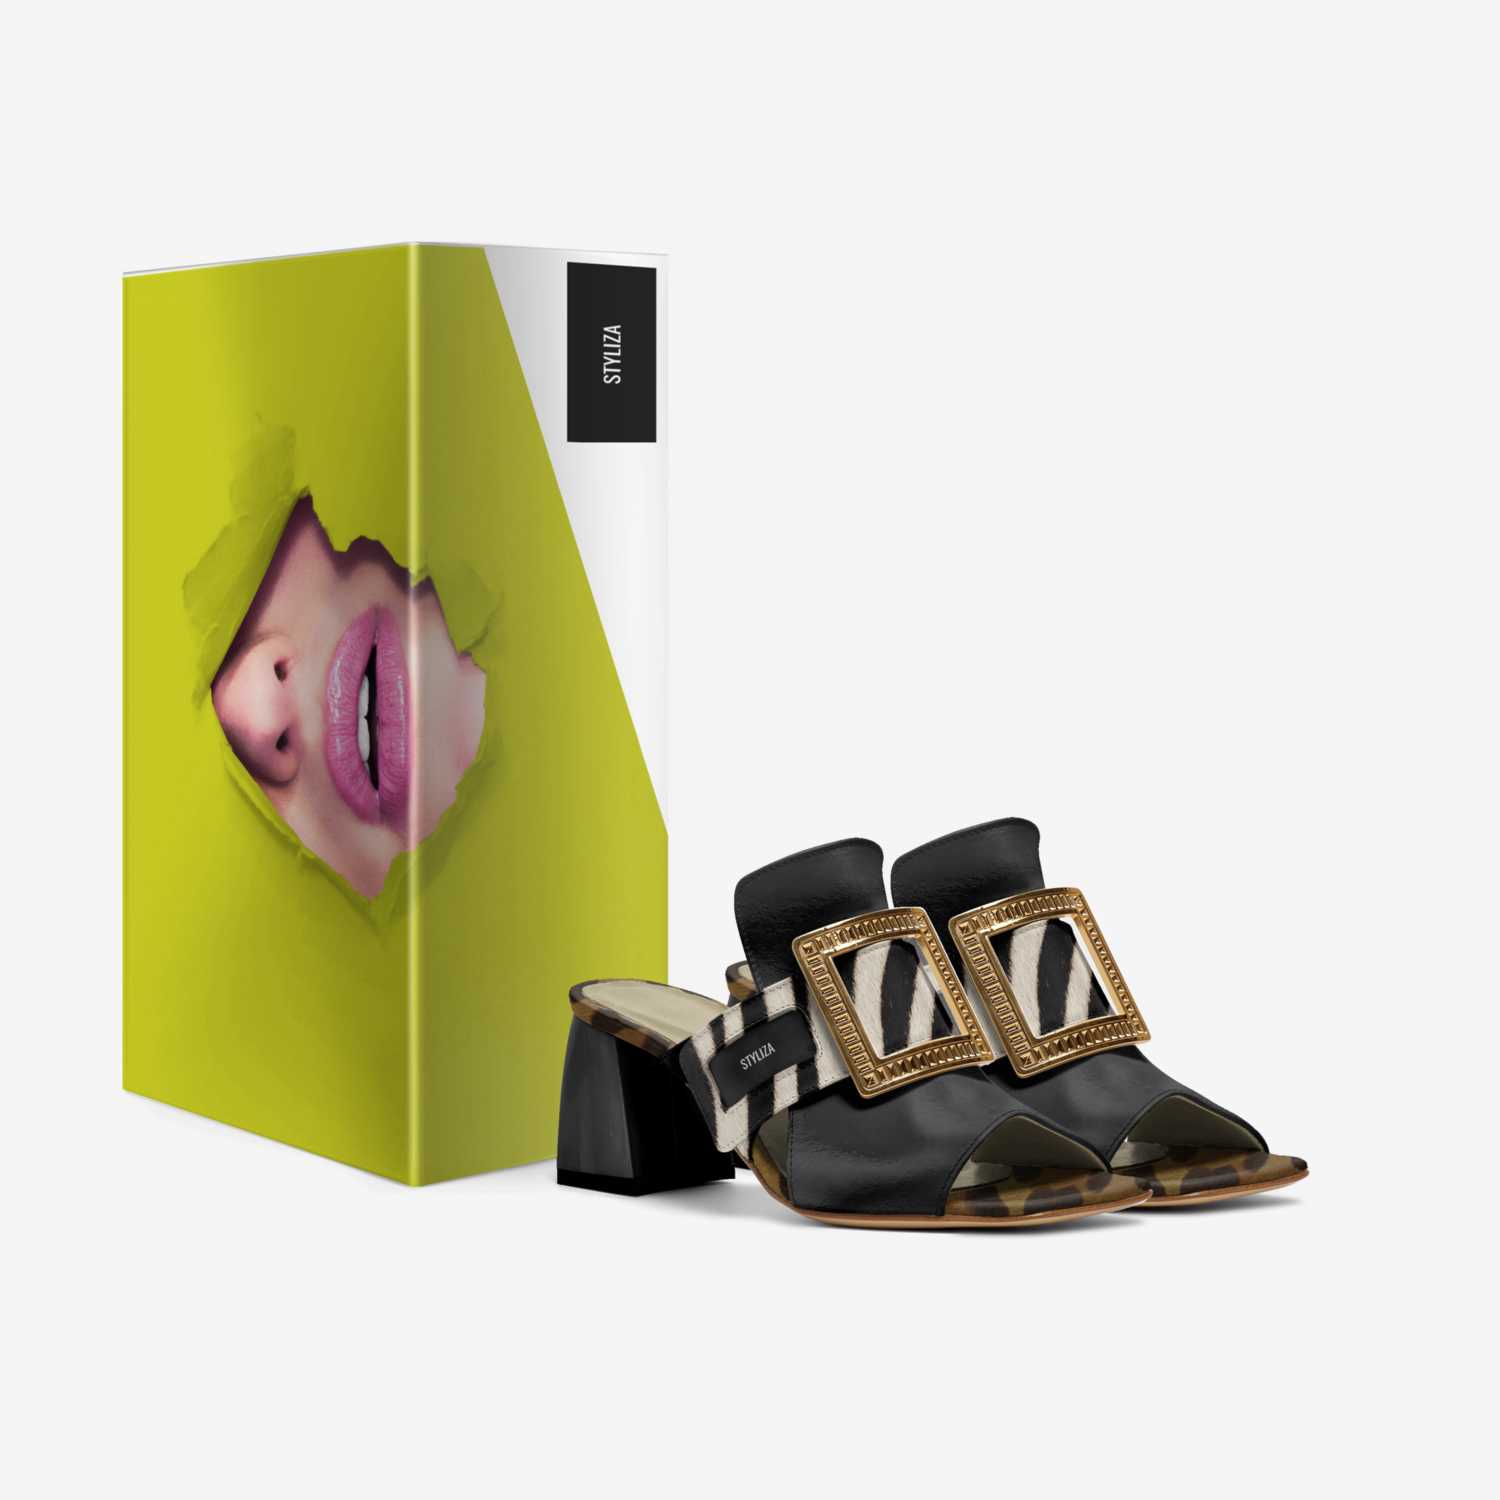 Styliza custom made in Italy shoes by Lytia Wilson | Box view